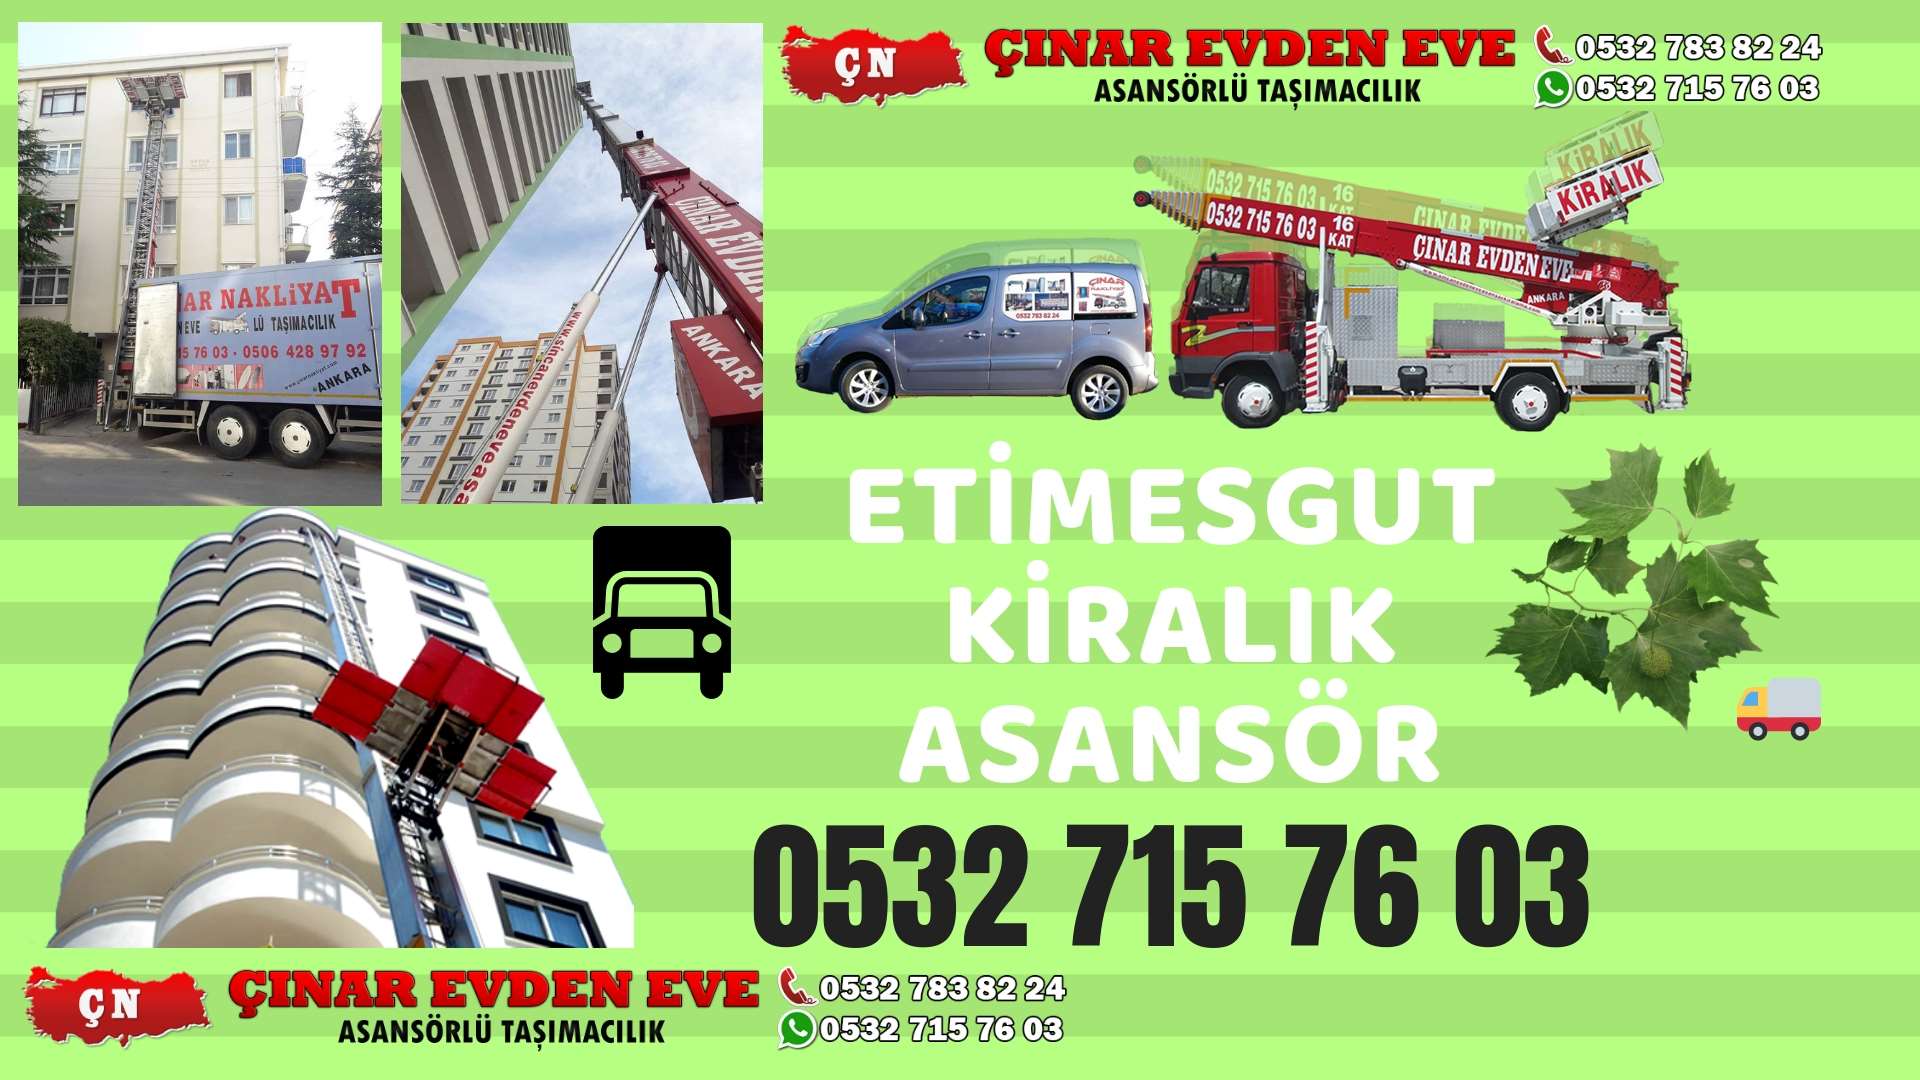 Ankara Yenimahalle Ev taşıma asansörü kiralama ankara 0532 715 76 03